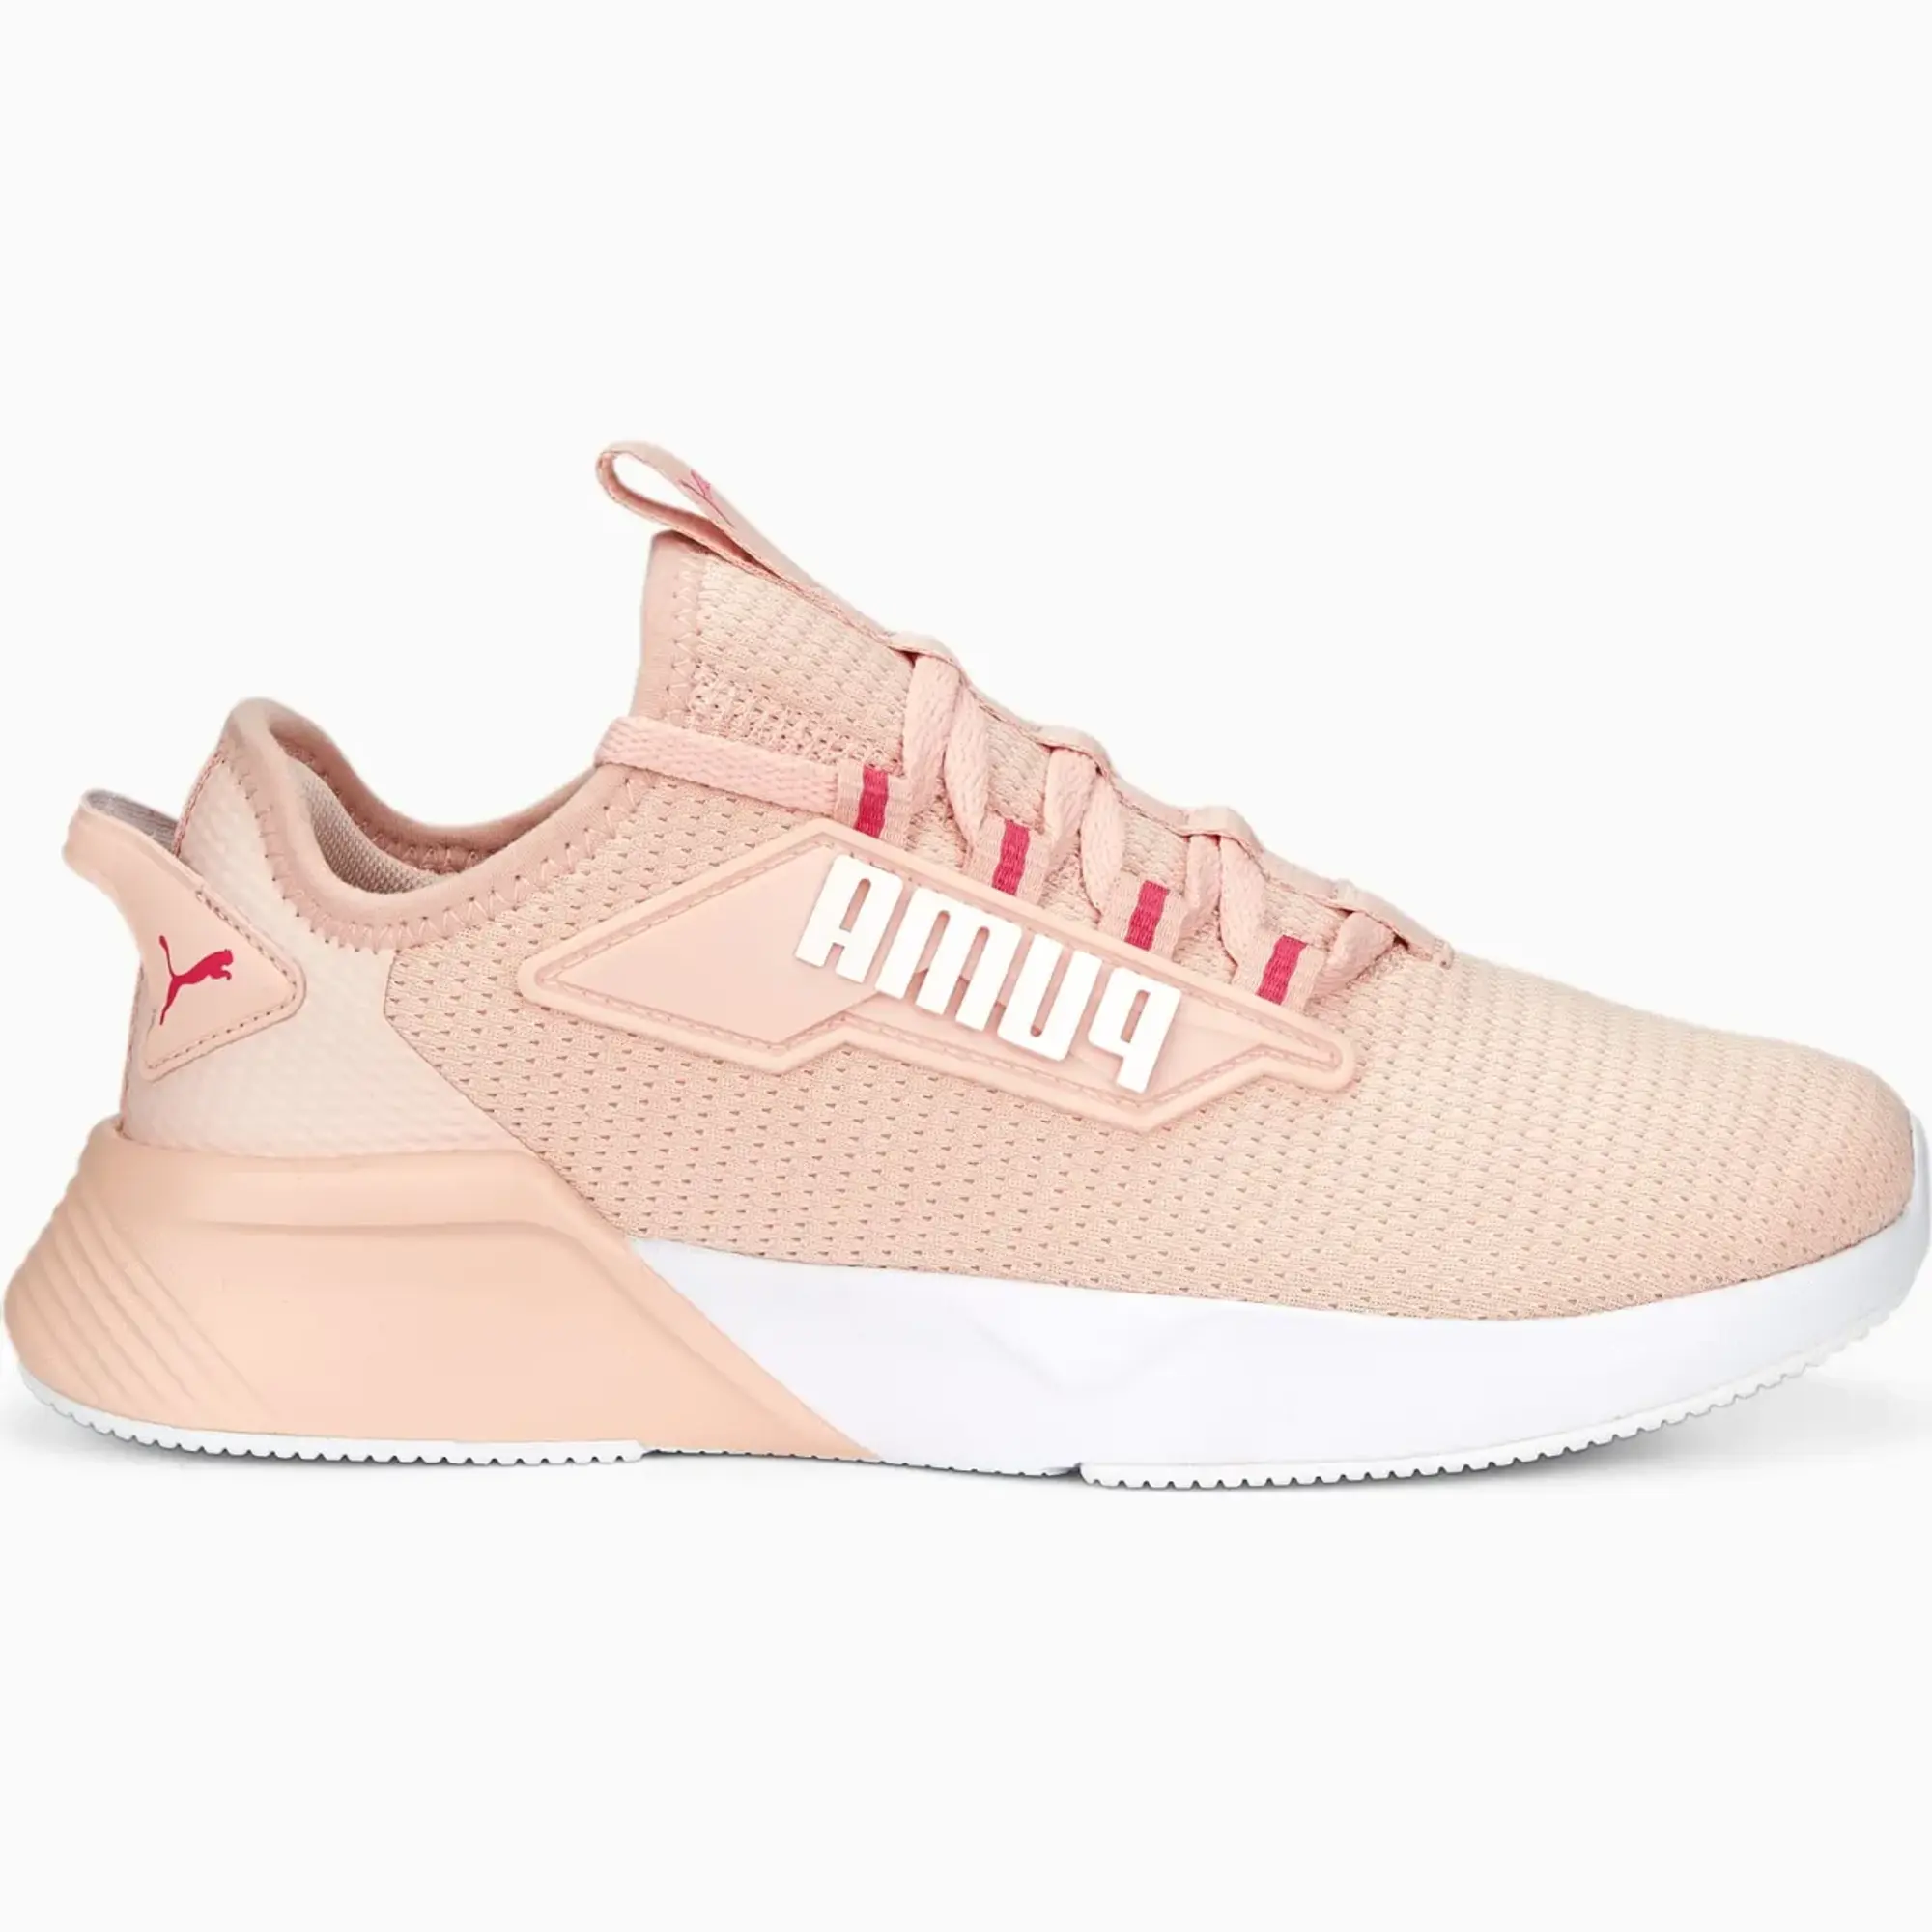 PUMA Retaliate 2 Sneakers Youth, Rose Dust/Glowing Pink